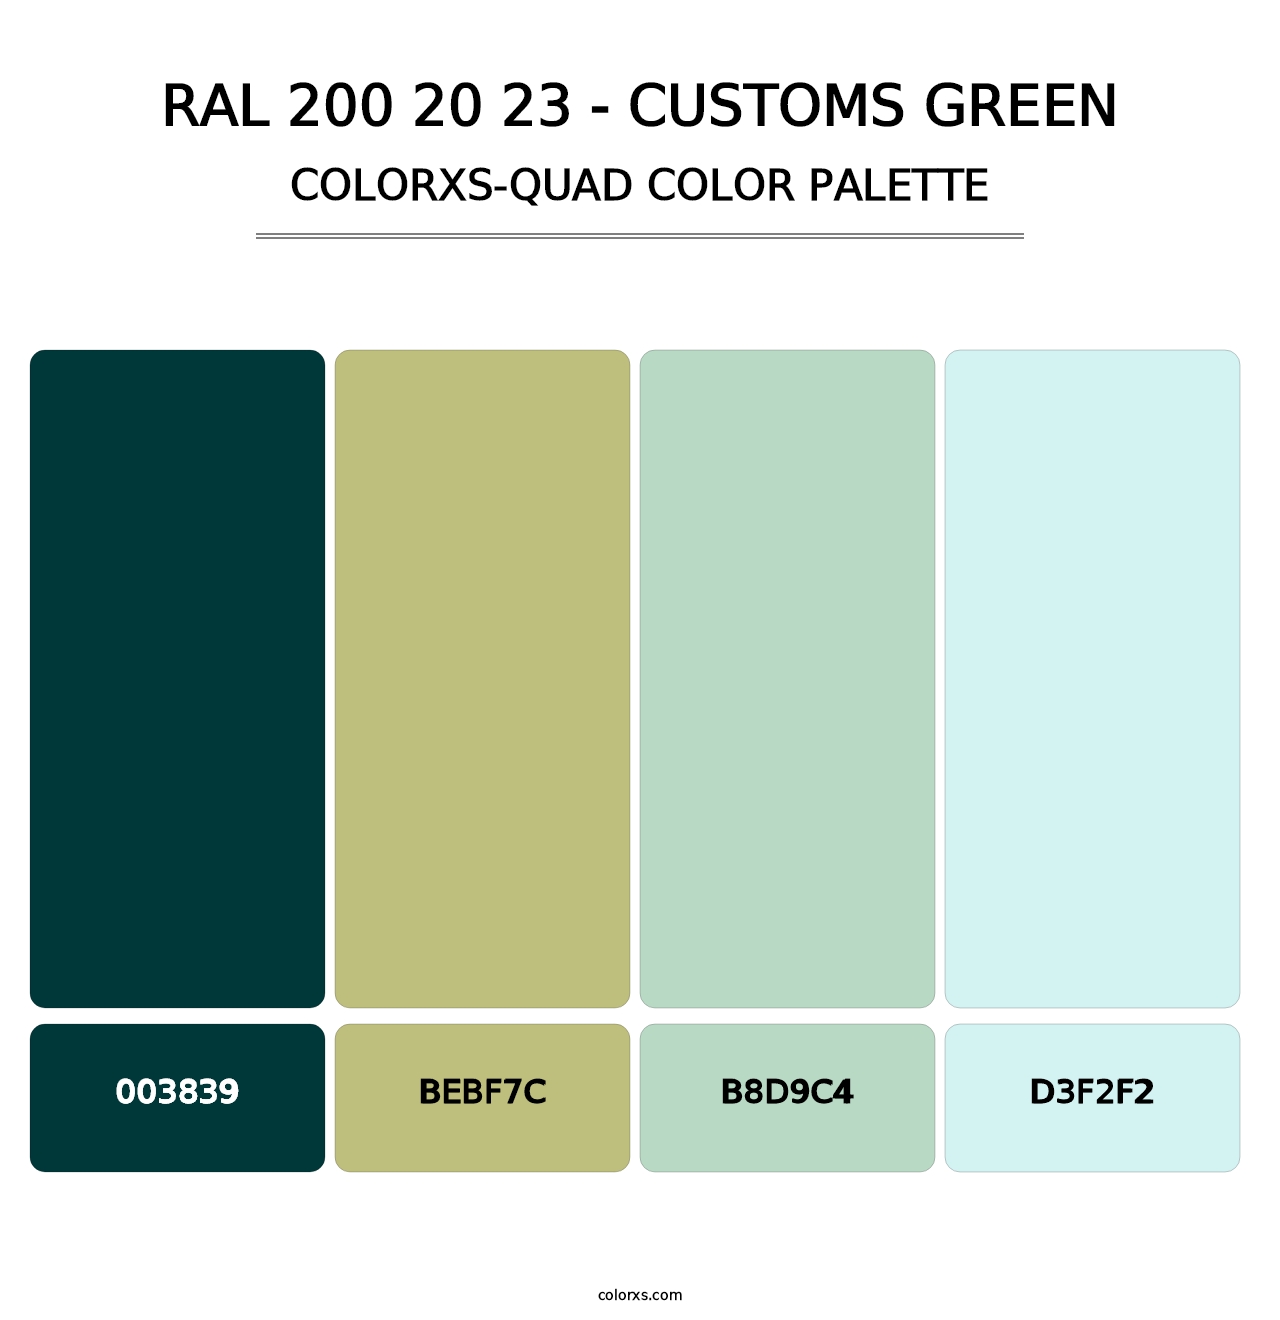 RAL 200 20 23 - Customs Green - Colorxs Quad Palette